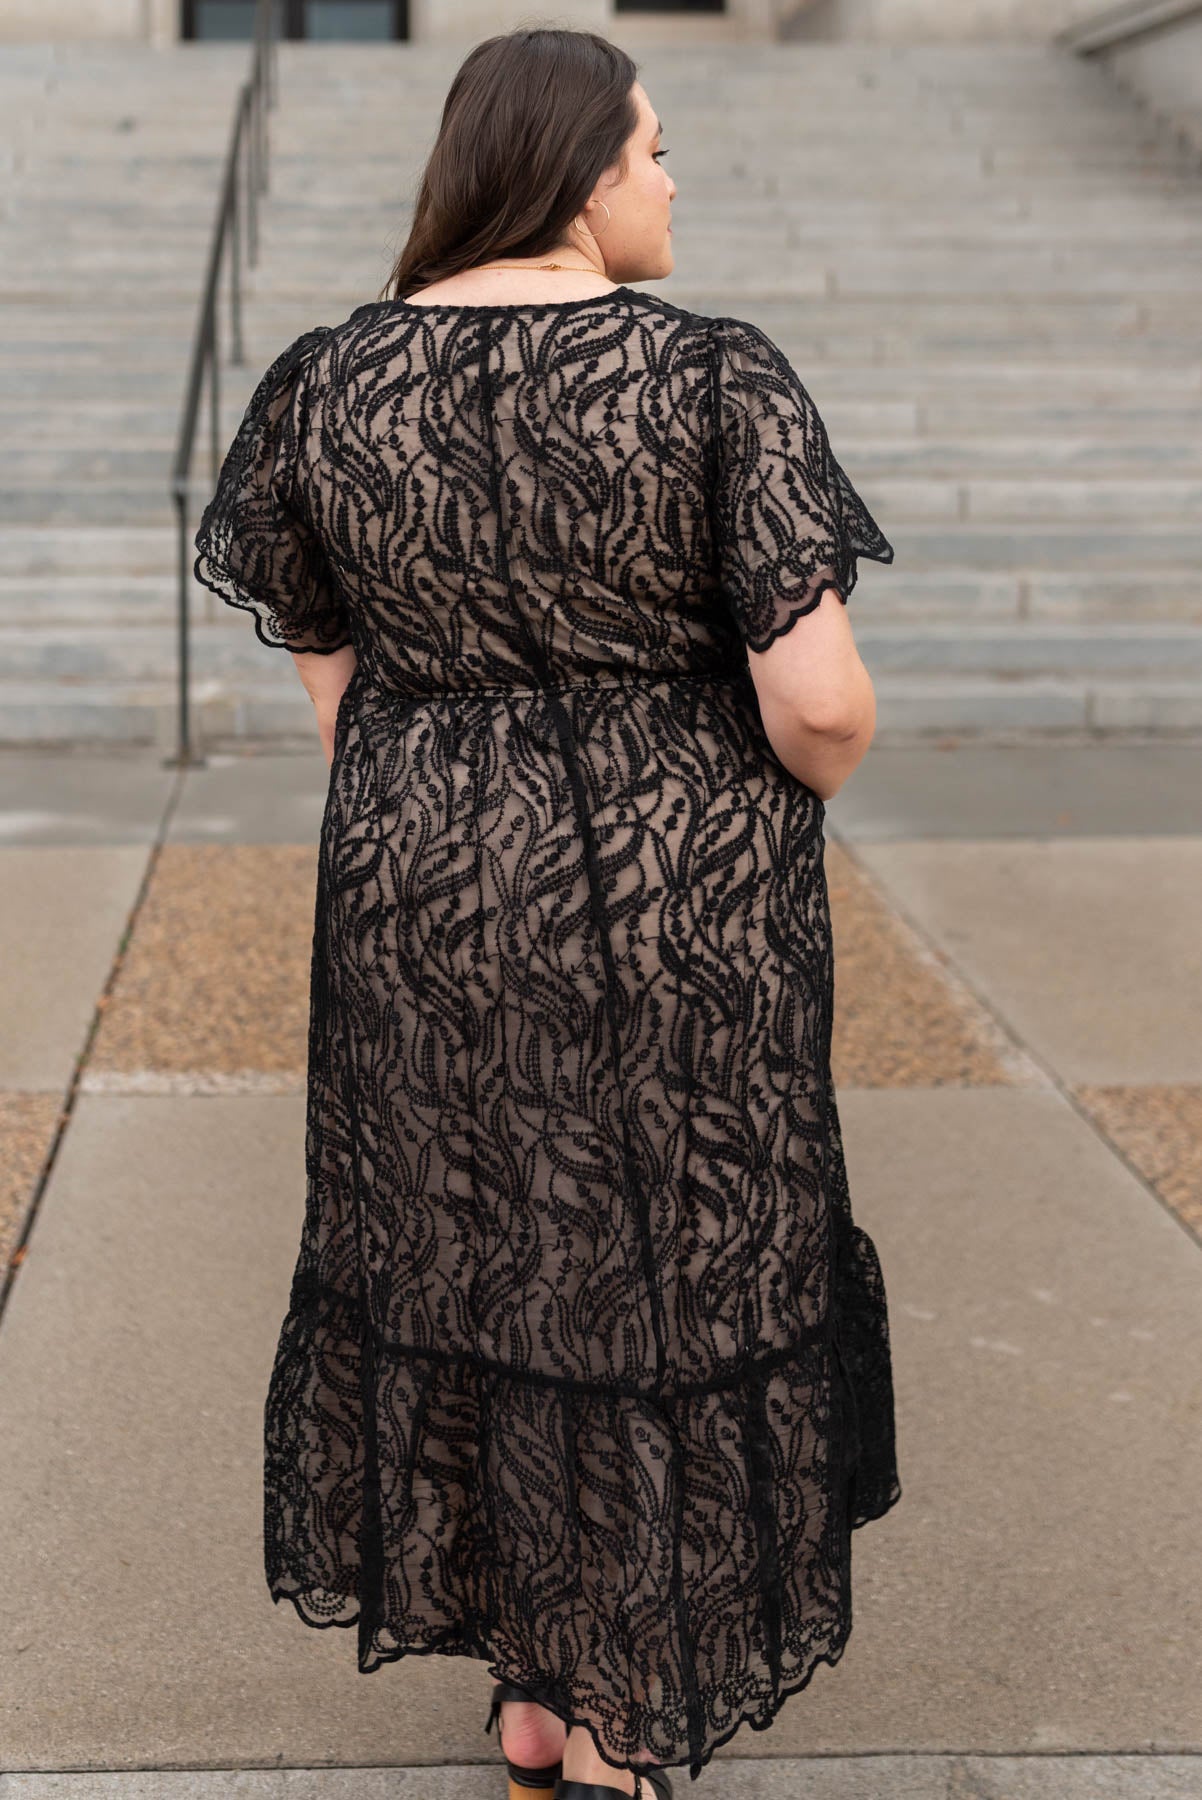 Back view of a plus lace black dress 